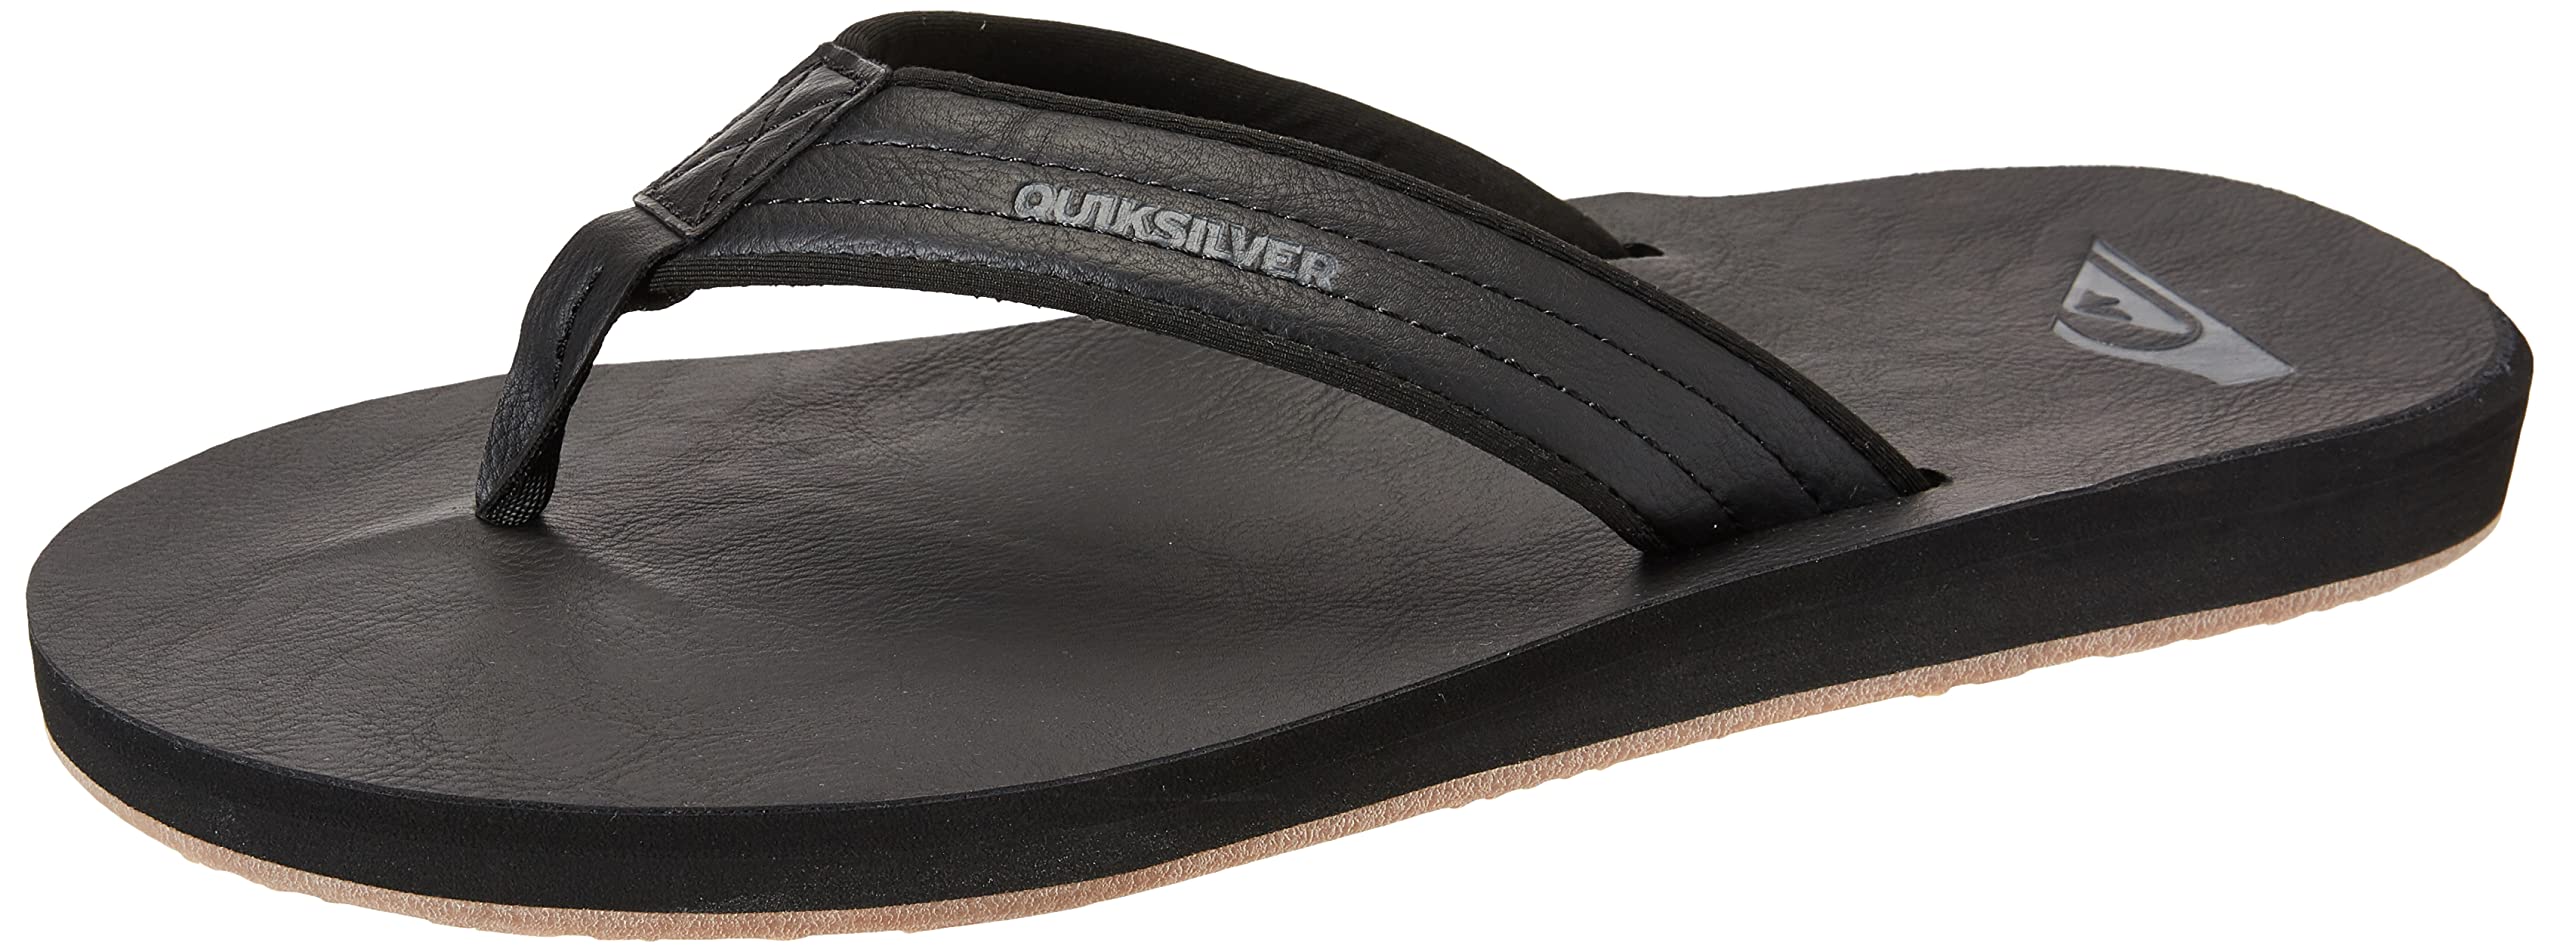 Quiksilver Men's Carver Nubuck Flip Flop Sandals